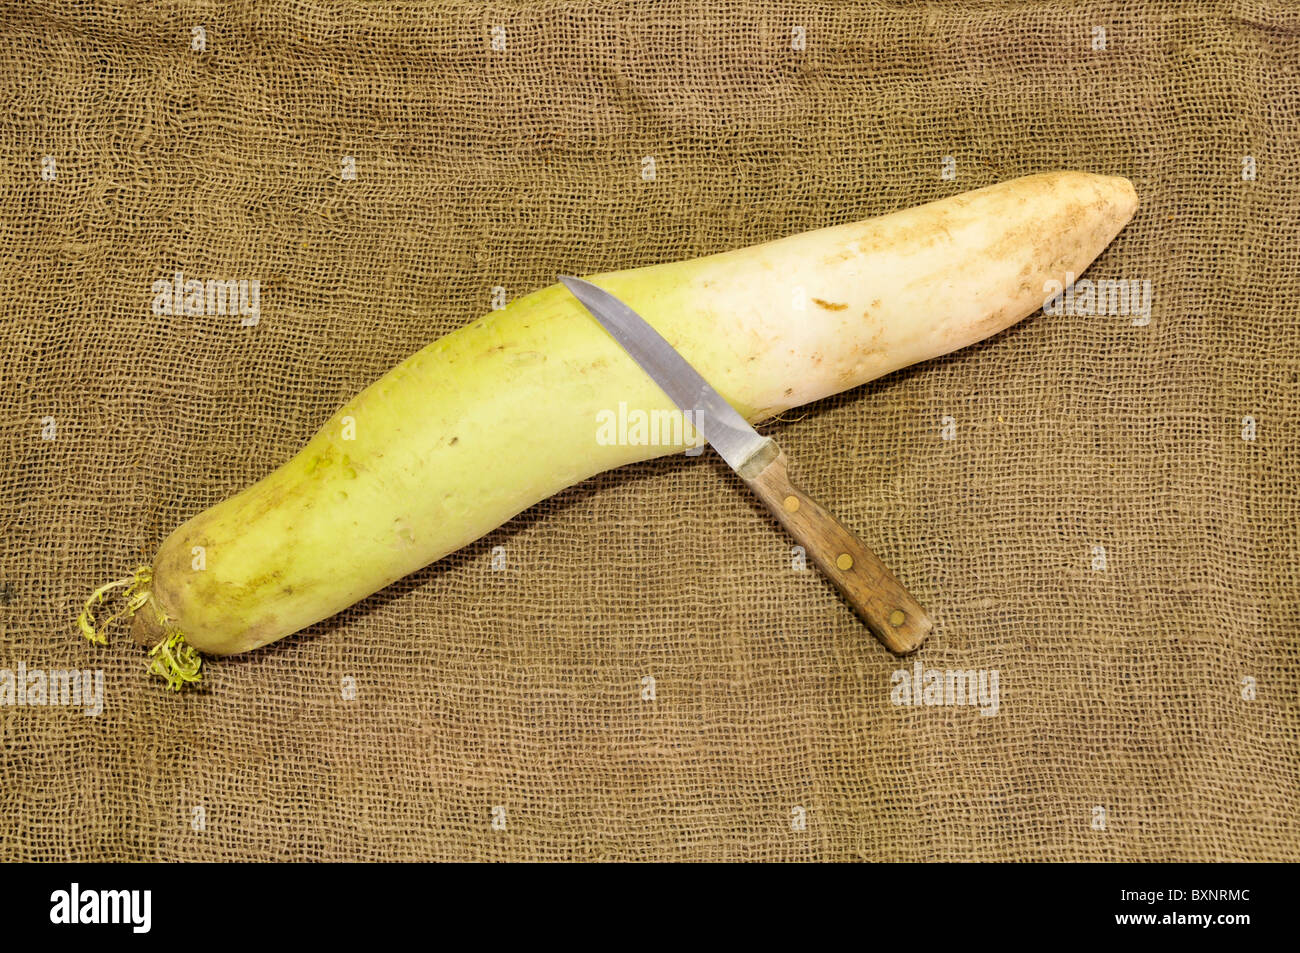 Daikon Japanese Radish with knife for scale and burlap background Stock Photo